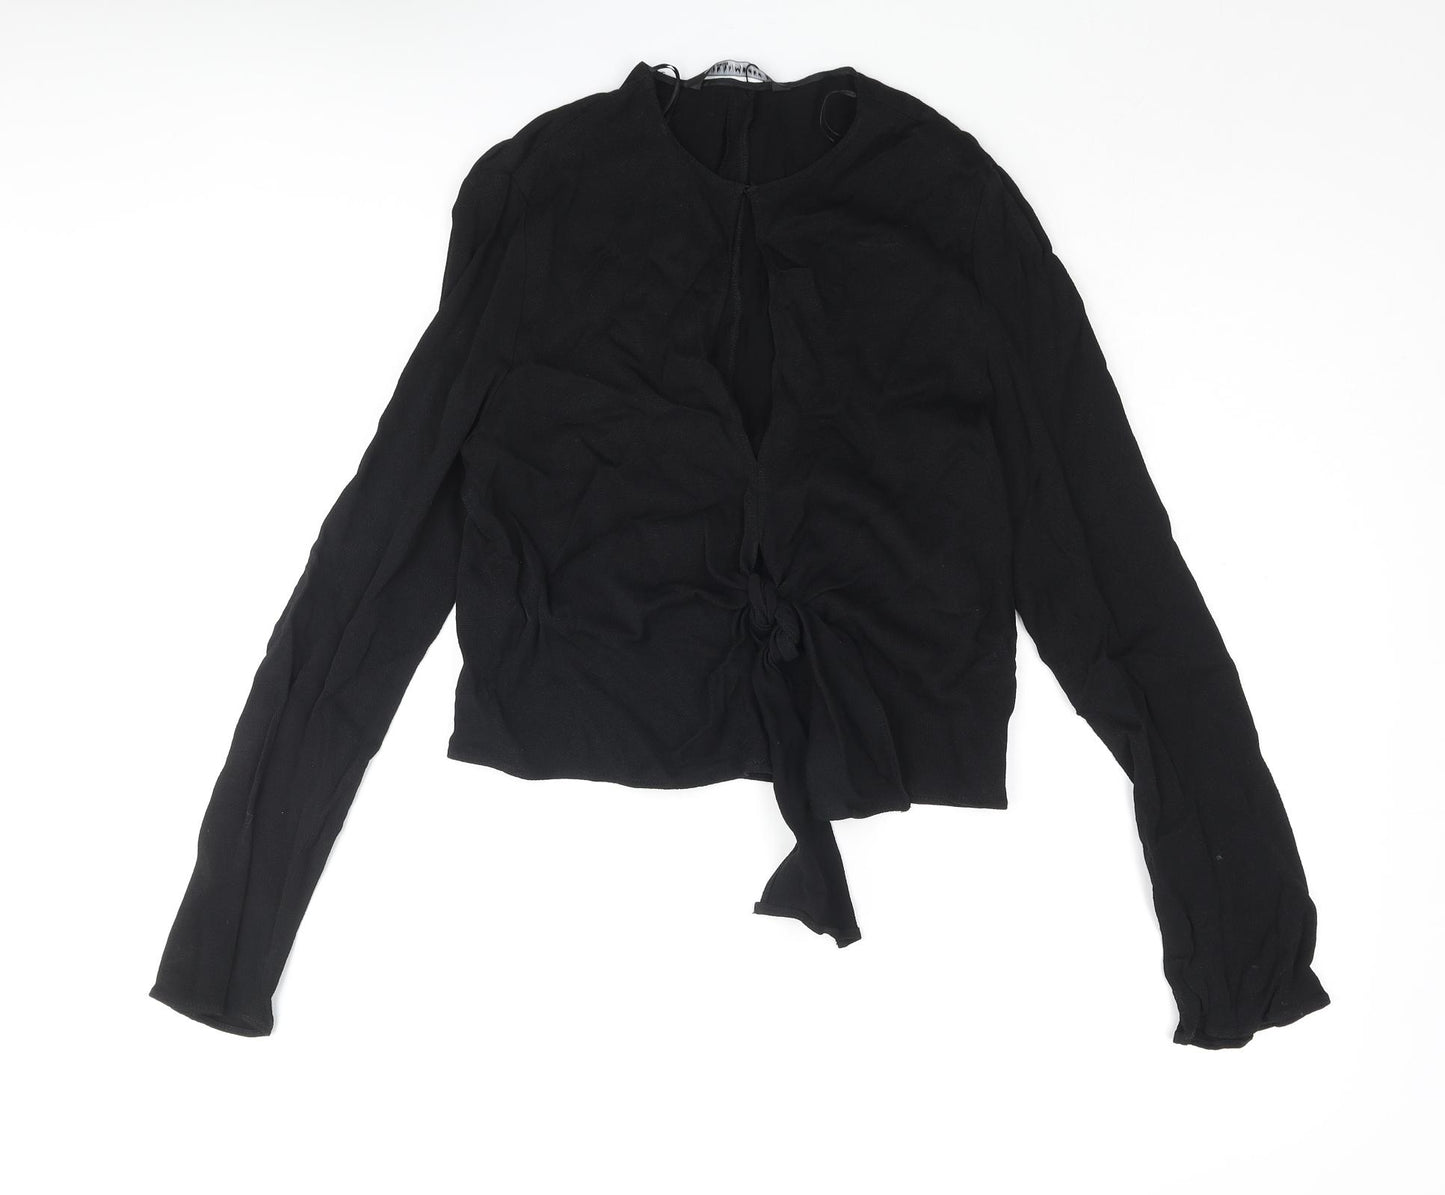 Zara Womens Black Viscose Basic Blouse Size S Round Neck - Keyhole Front Knot